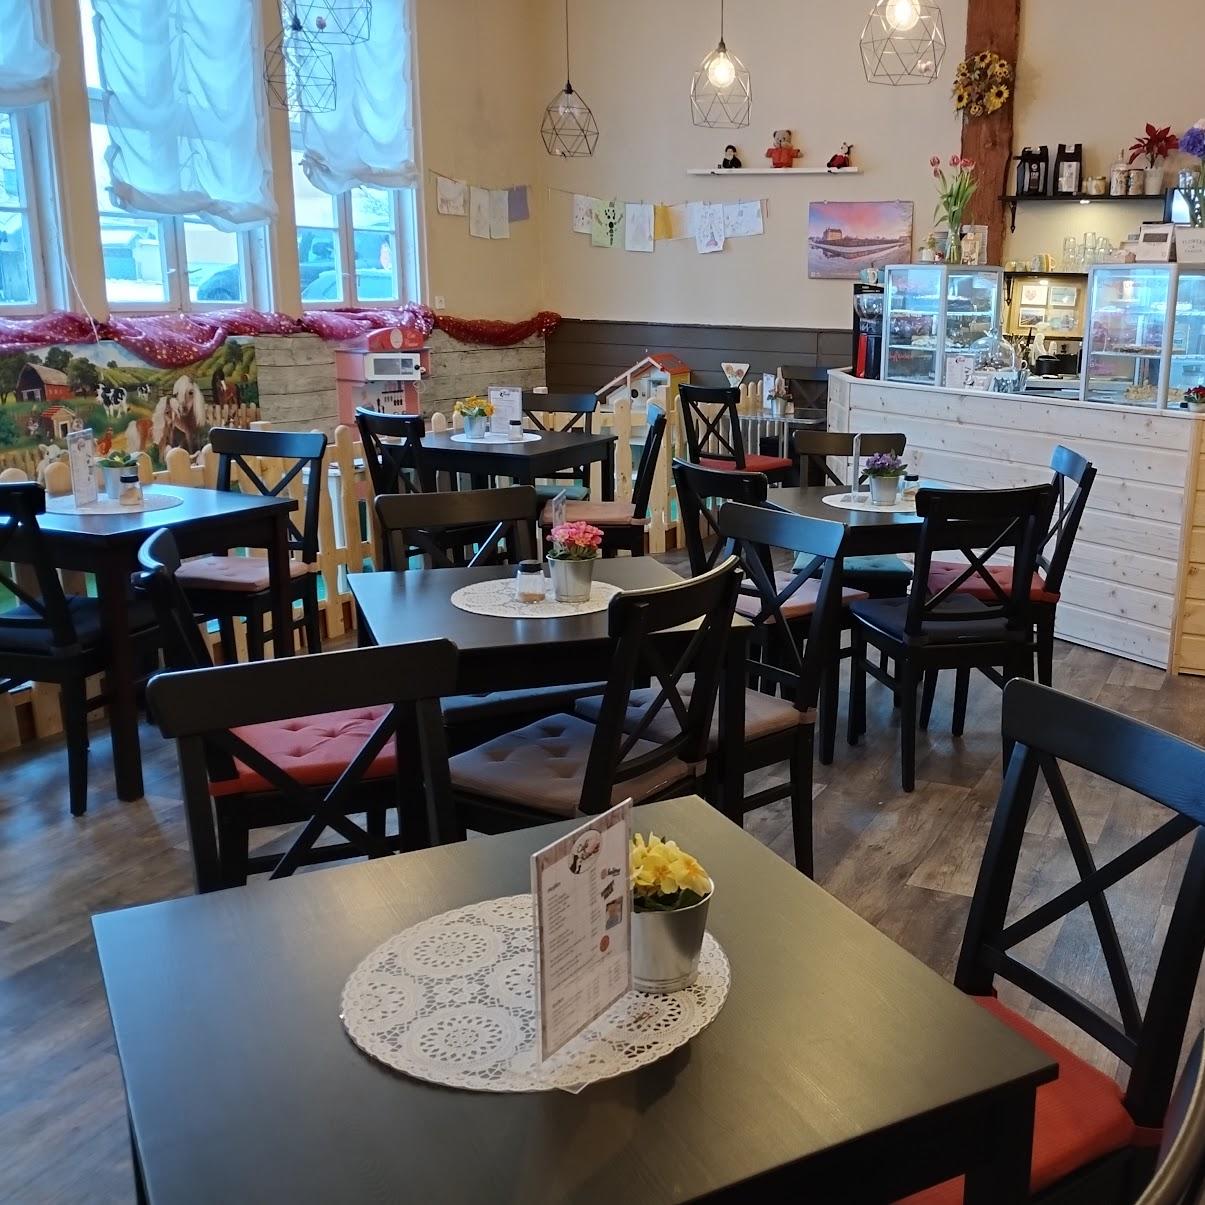 Restaurant "Café Kiewitt - Familiencafé" in Loitz